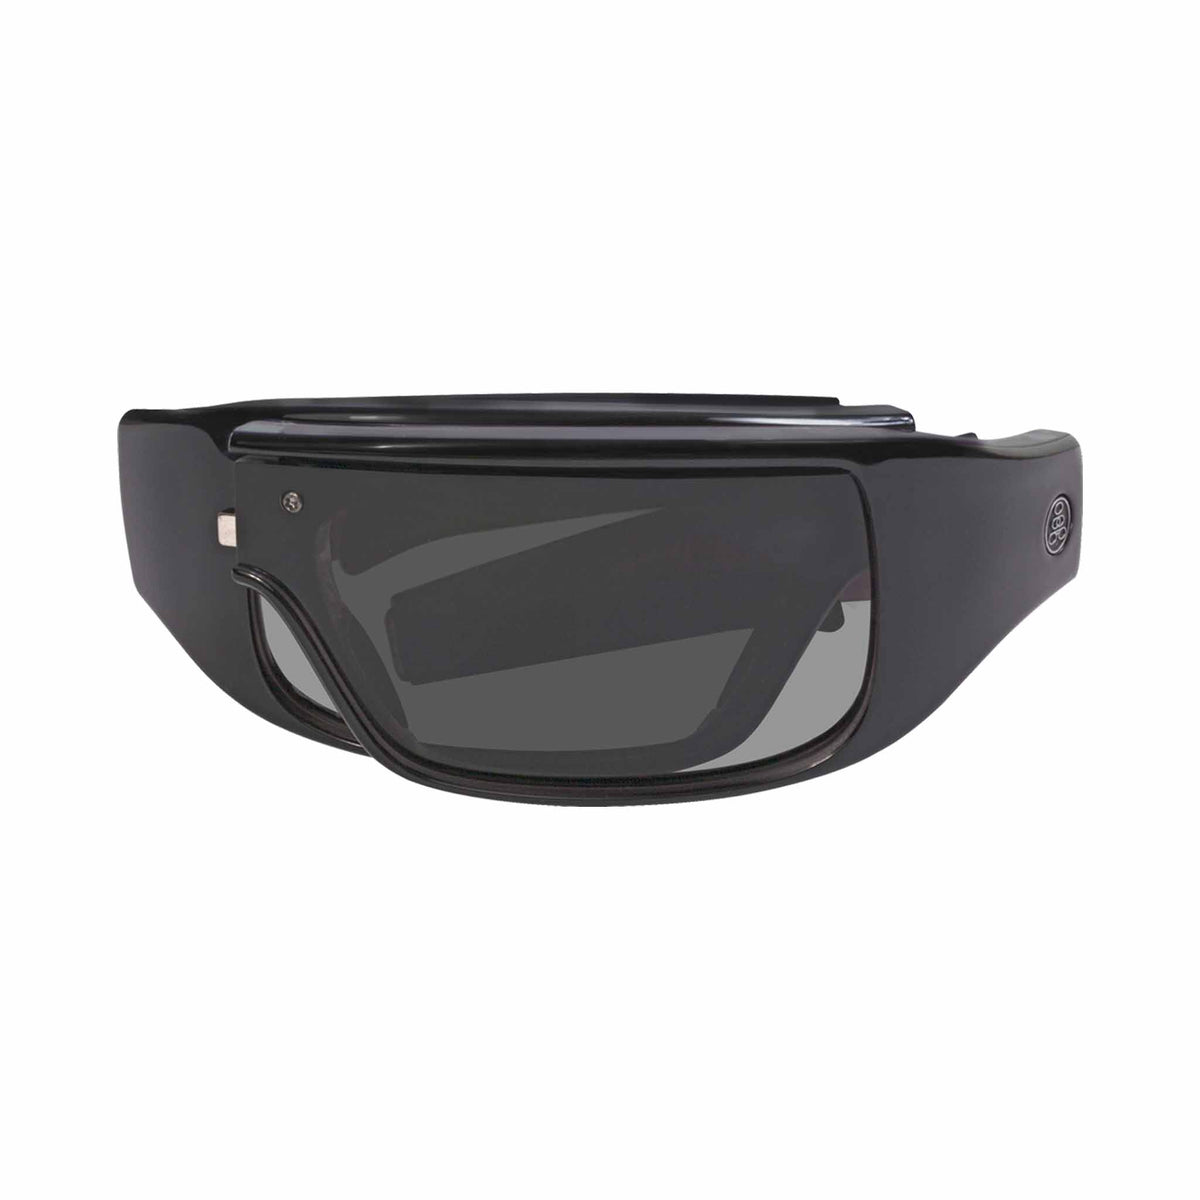 Popticals, Premium Compact Sunglasses, PopGear, 010051-BGGP, Polarized Sunglasses, Gloss Black Frame, Gray Lenses, Compact View